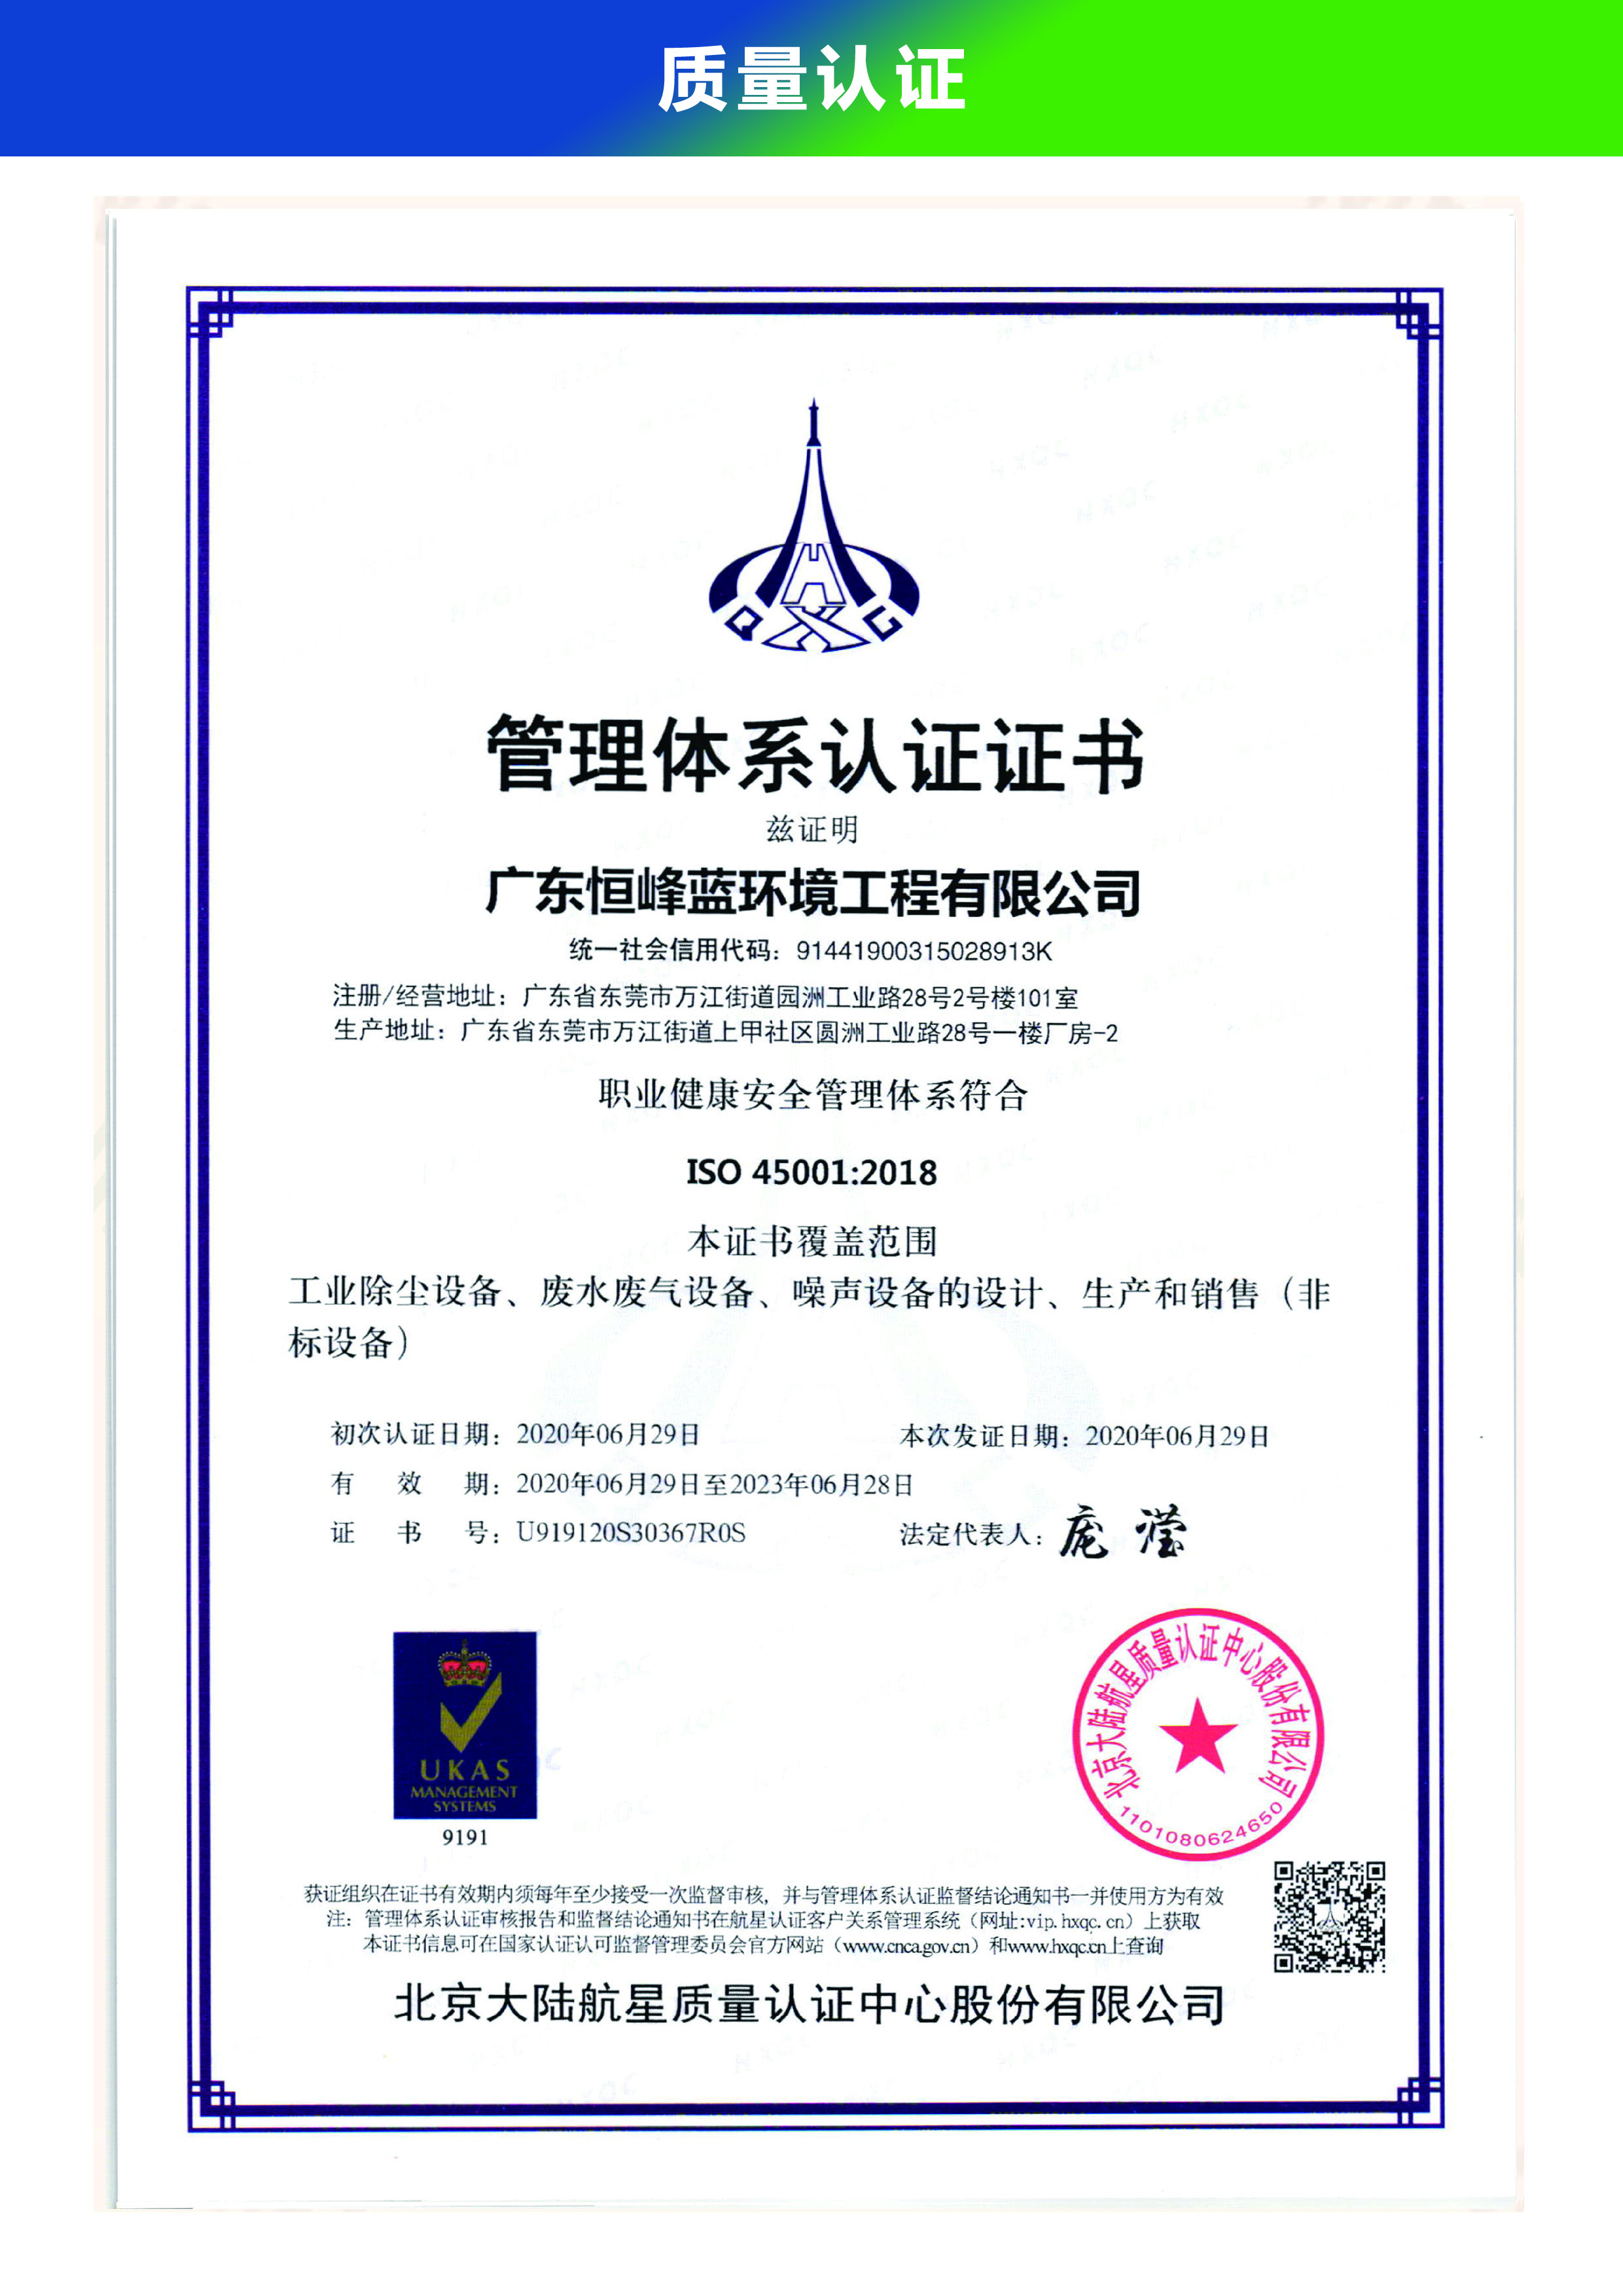  质量管理体系ISO45001认证